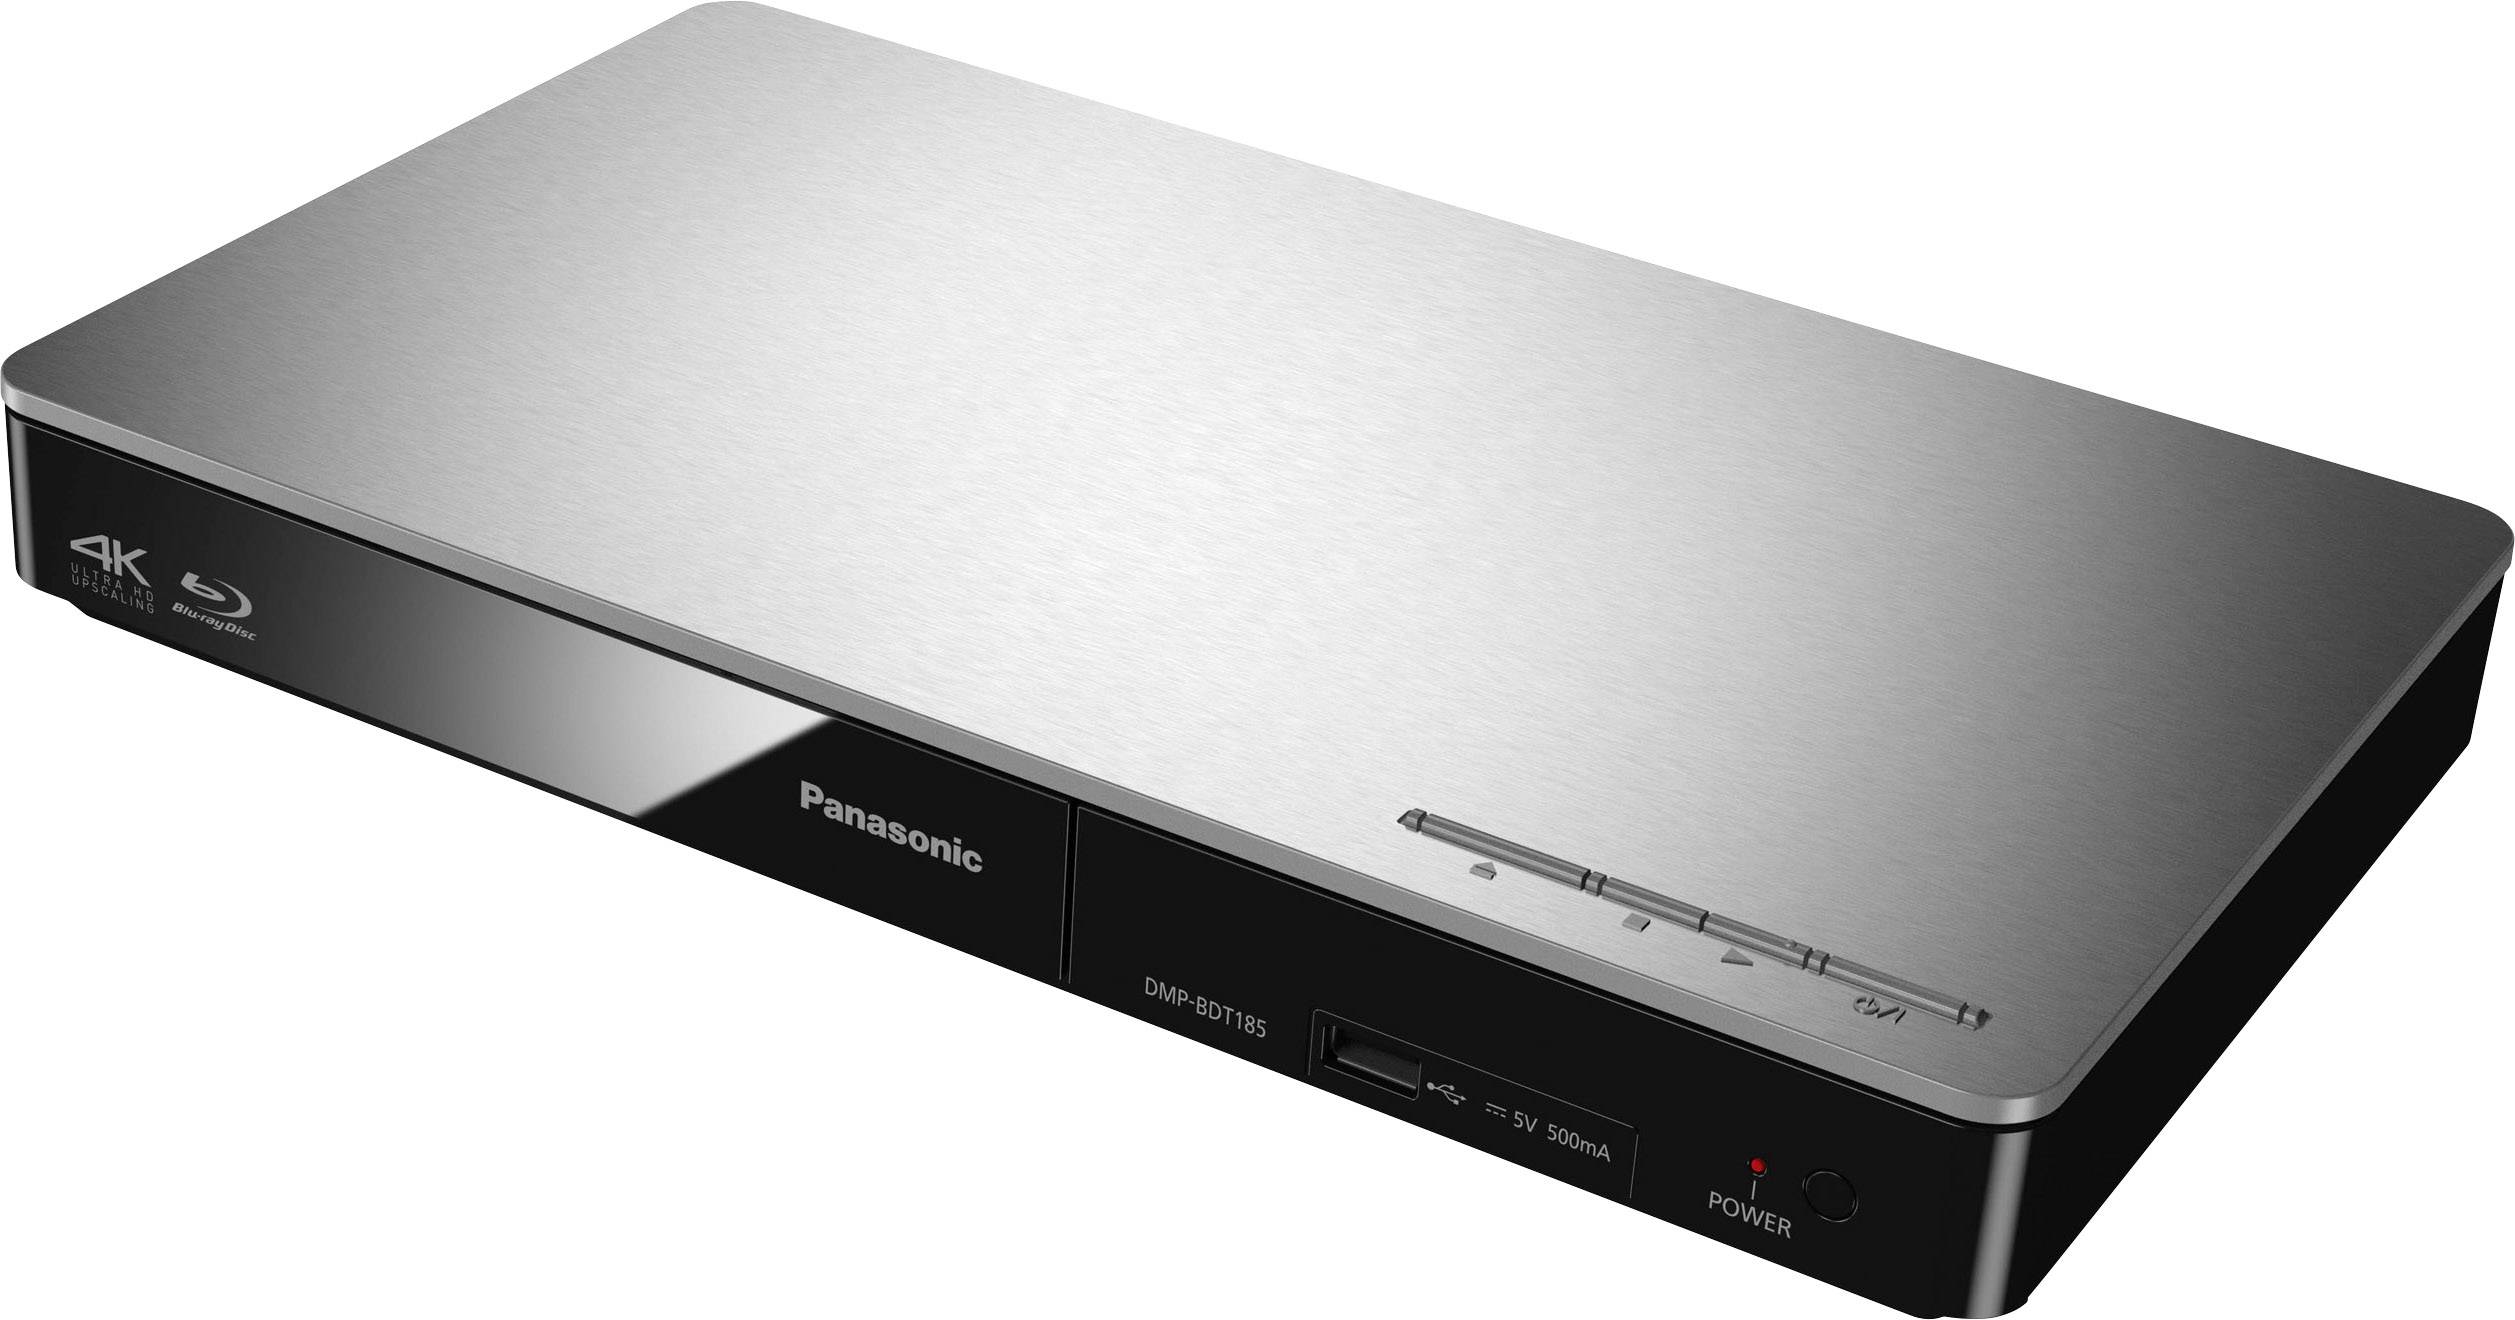 Panasonic DMP-BDT185 3D Blu-ray player 4K upscaling Silver |